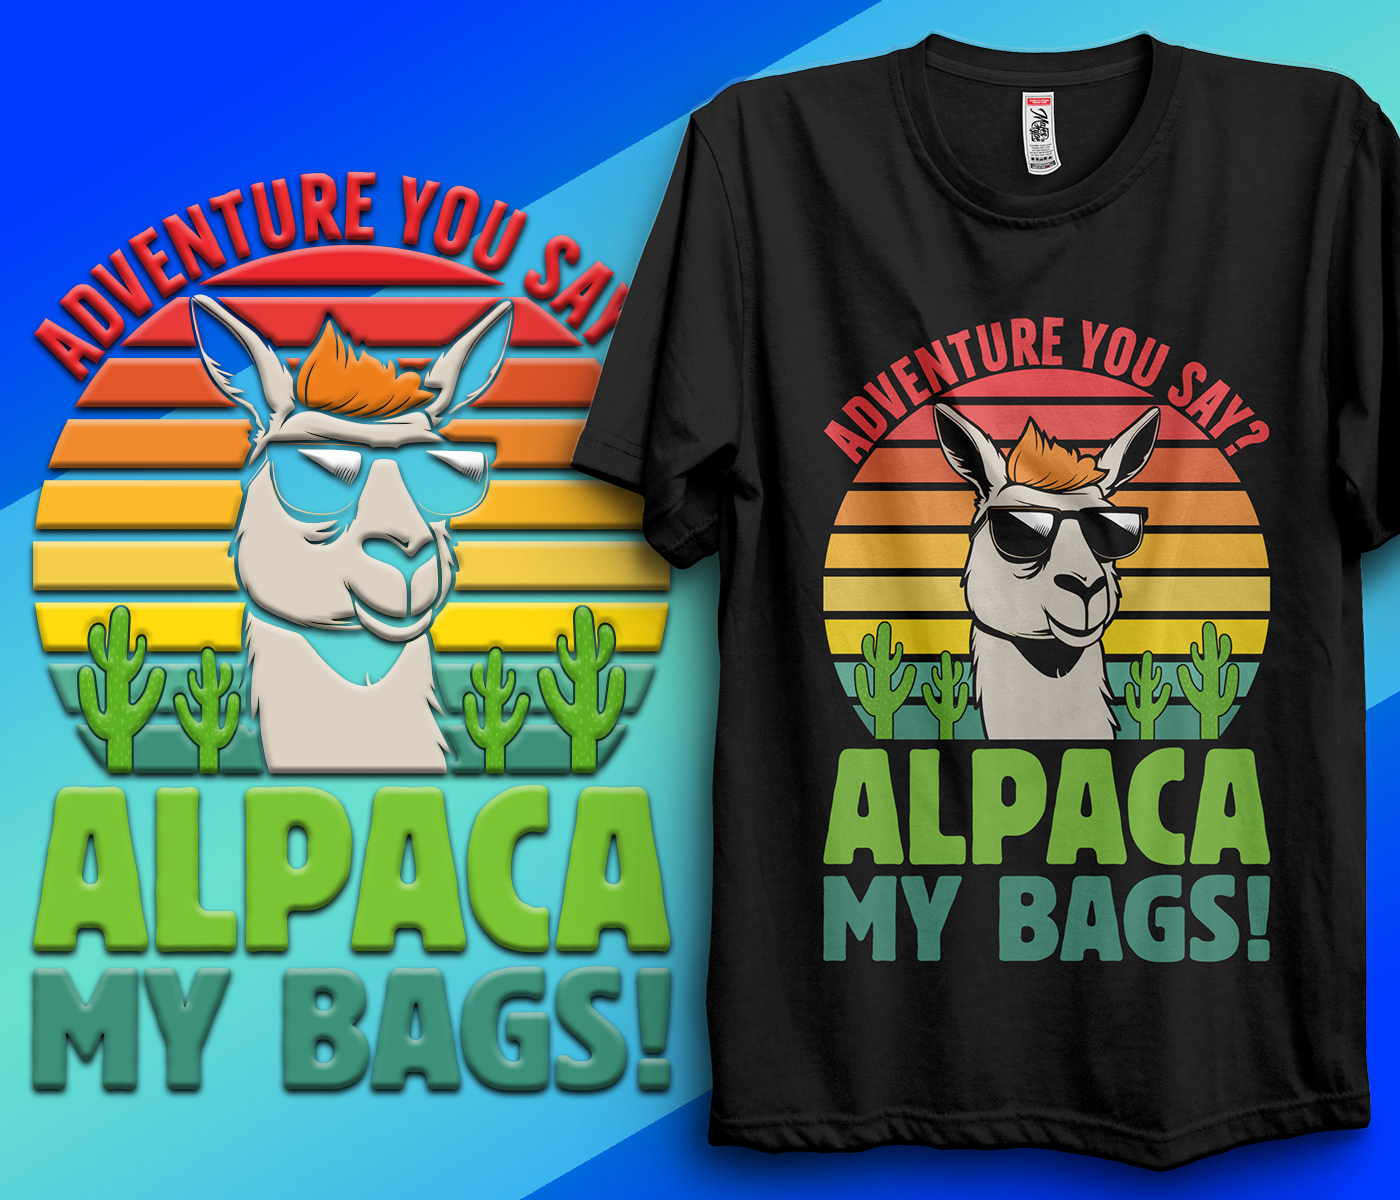 Alpaca T-shirt Design